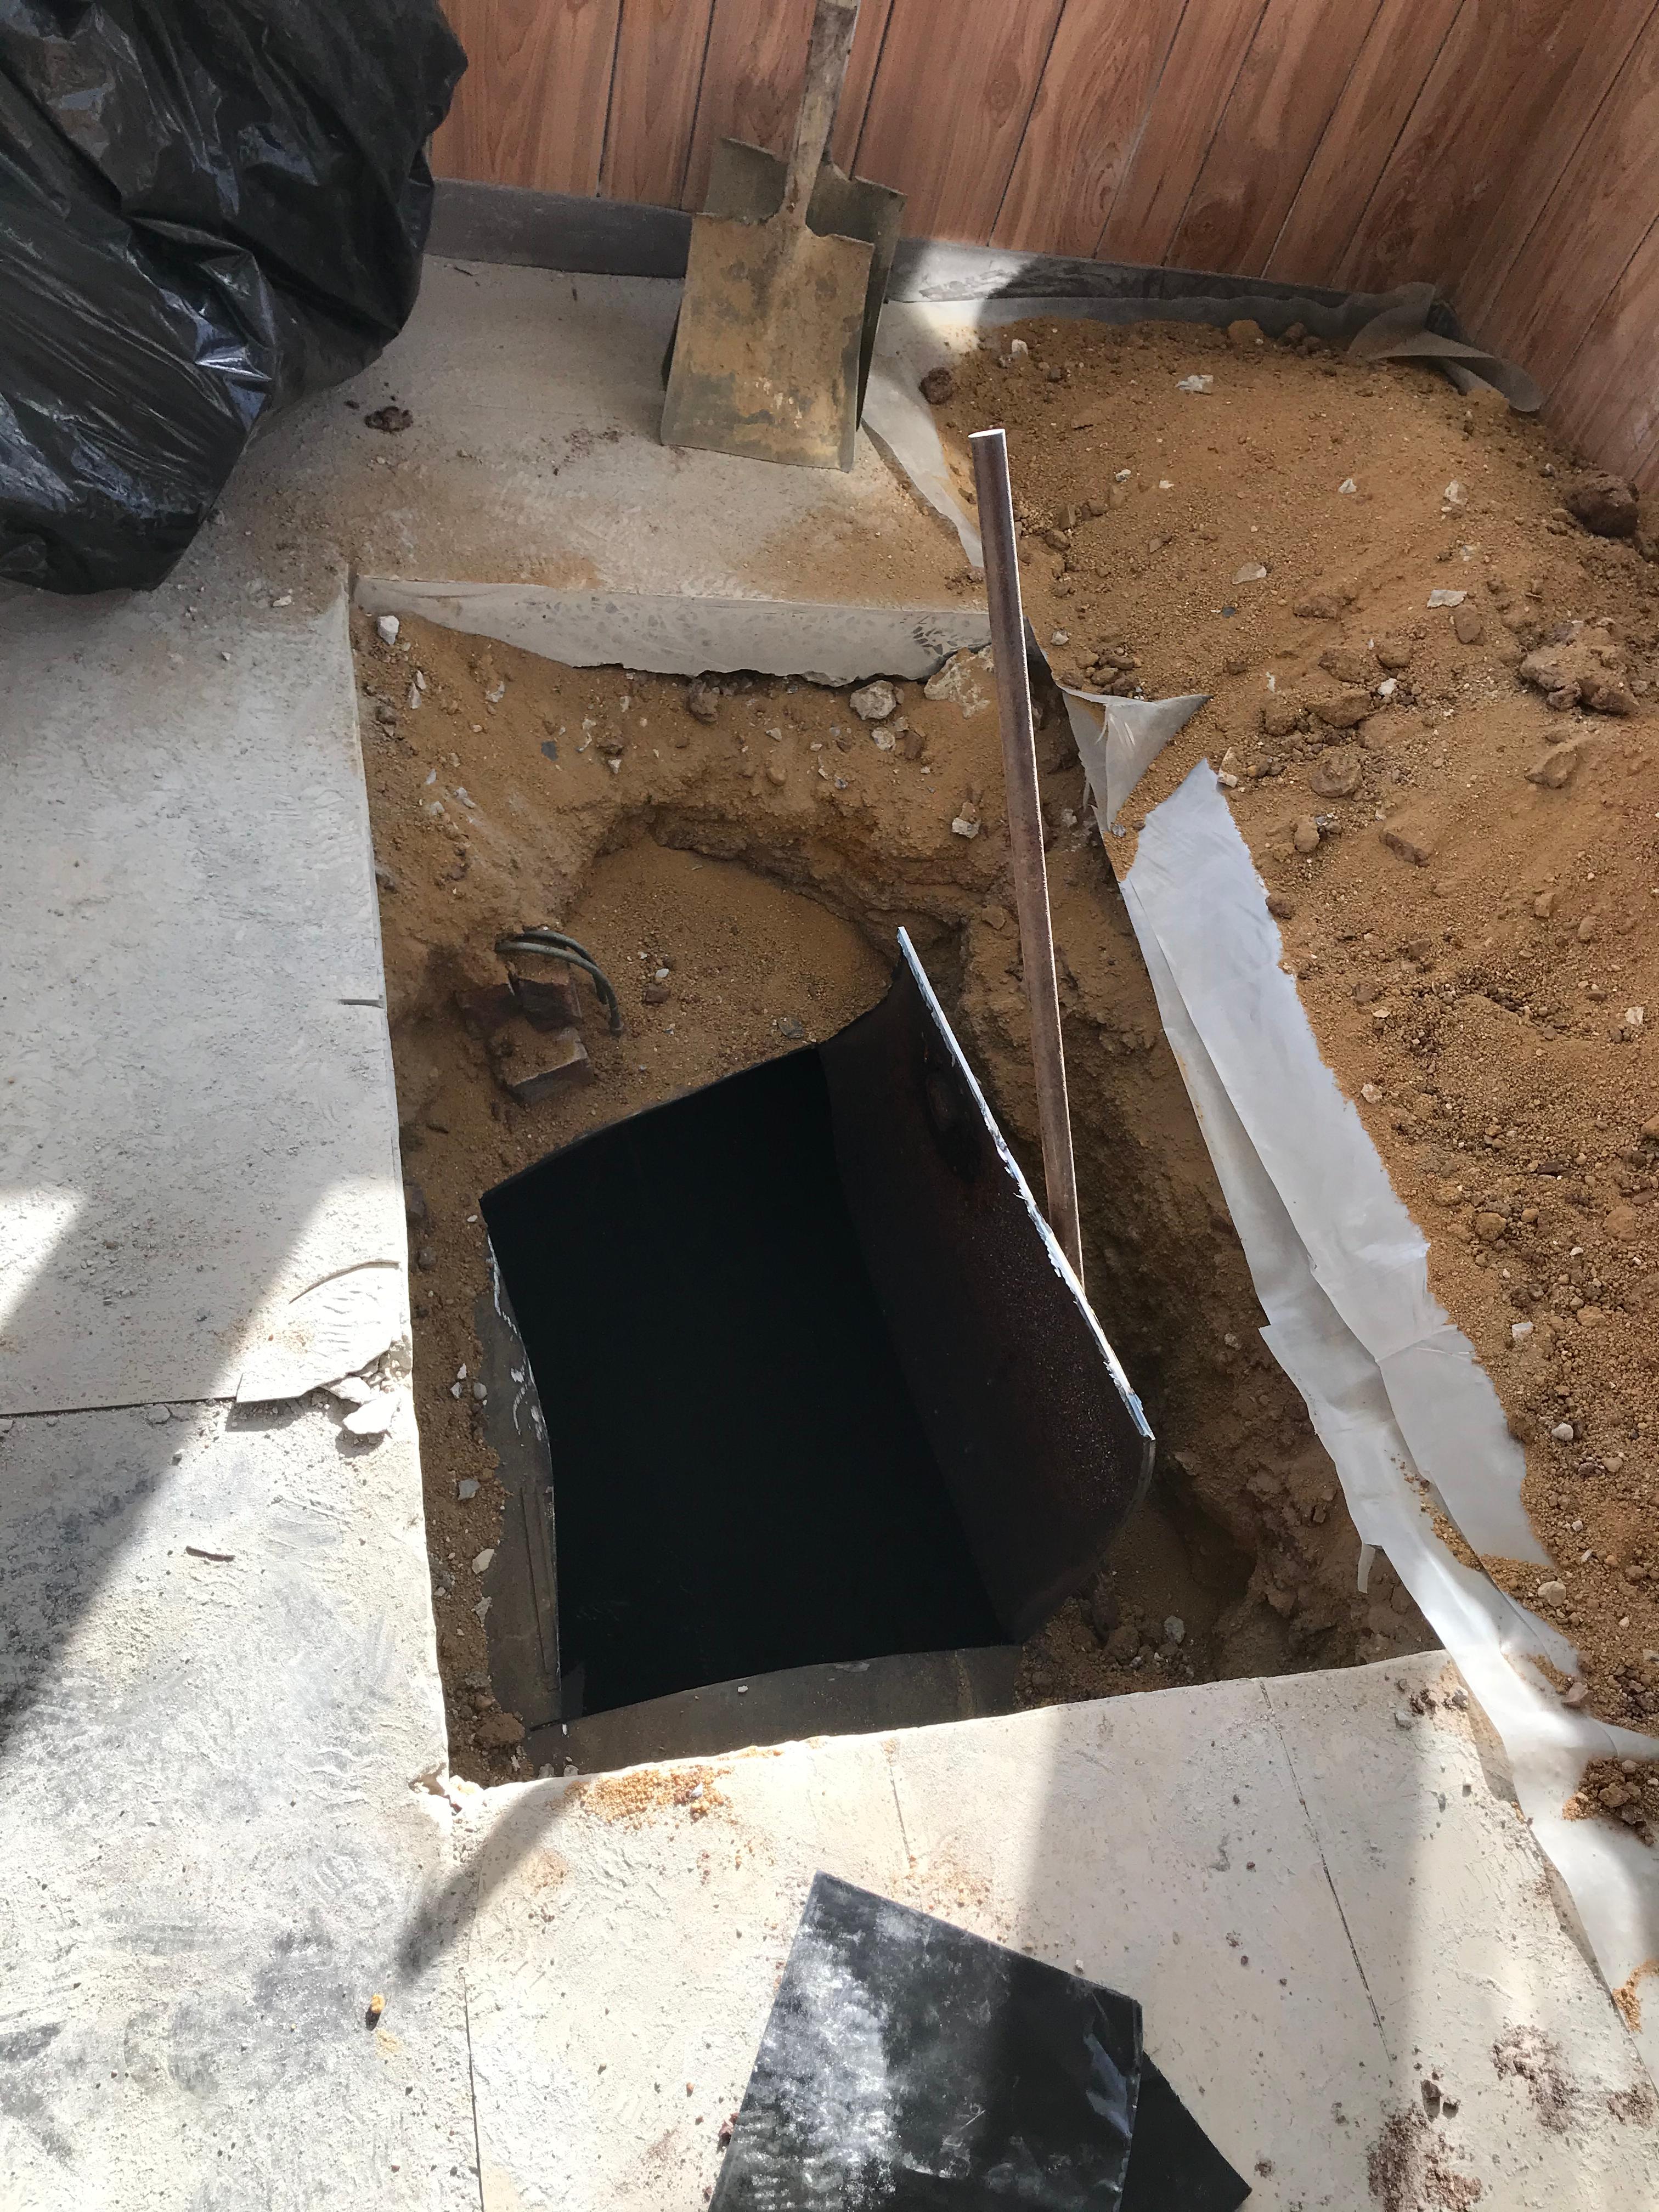 Oil tank buried below a porch